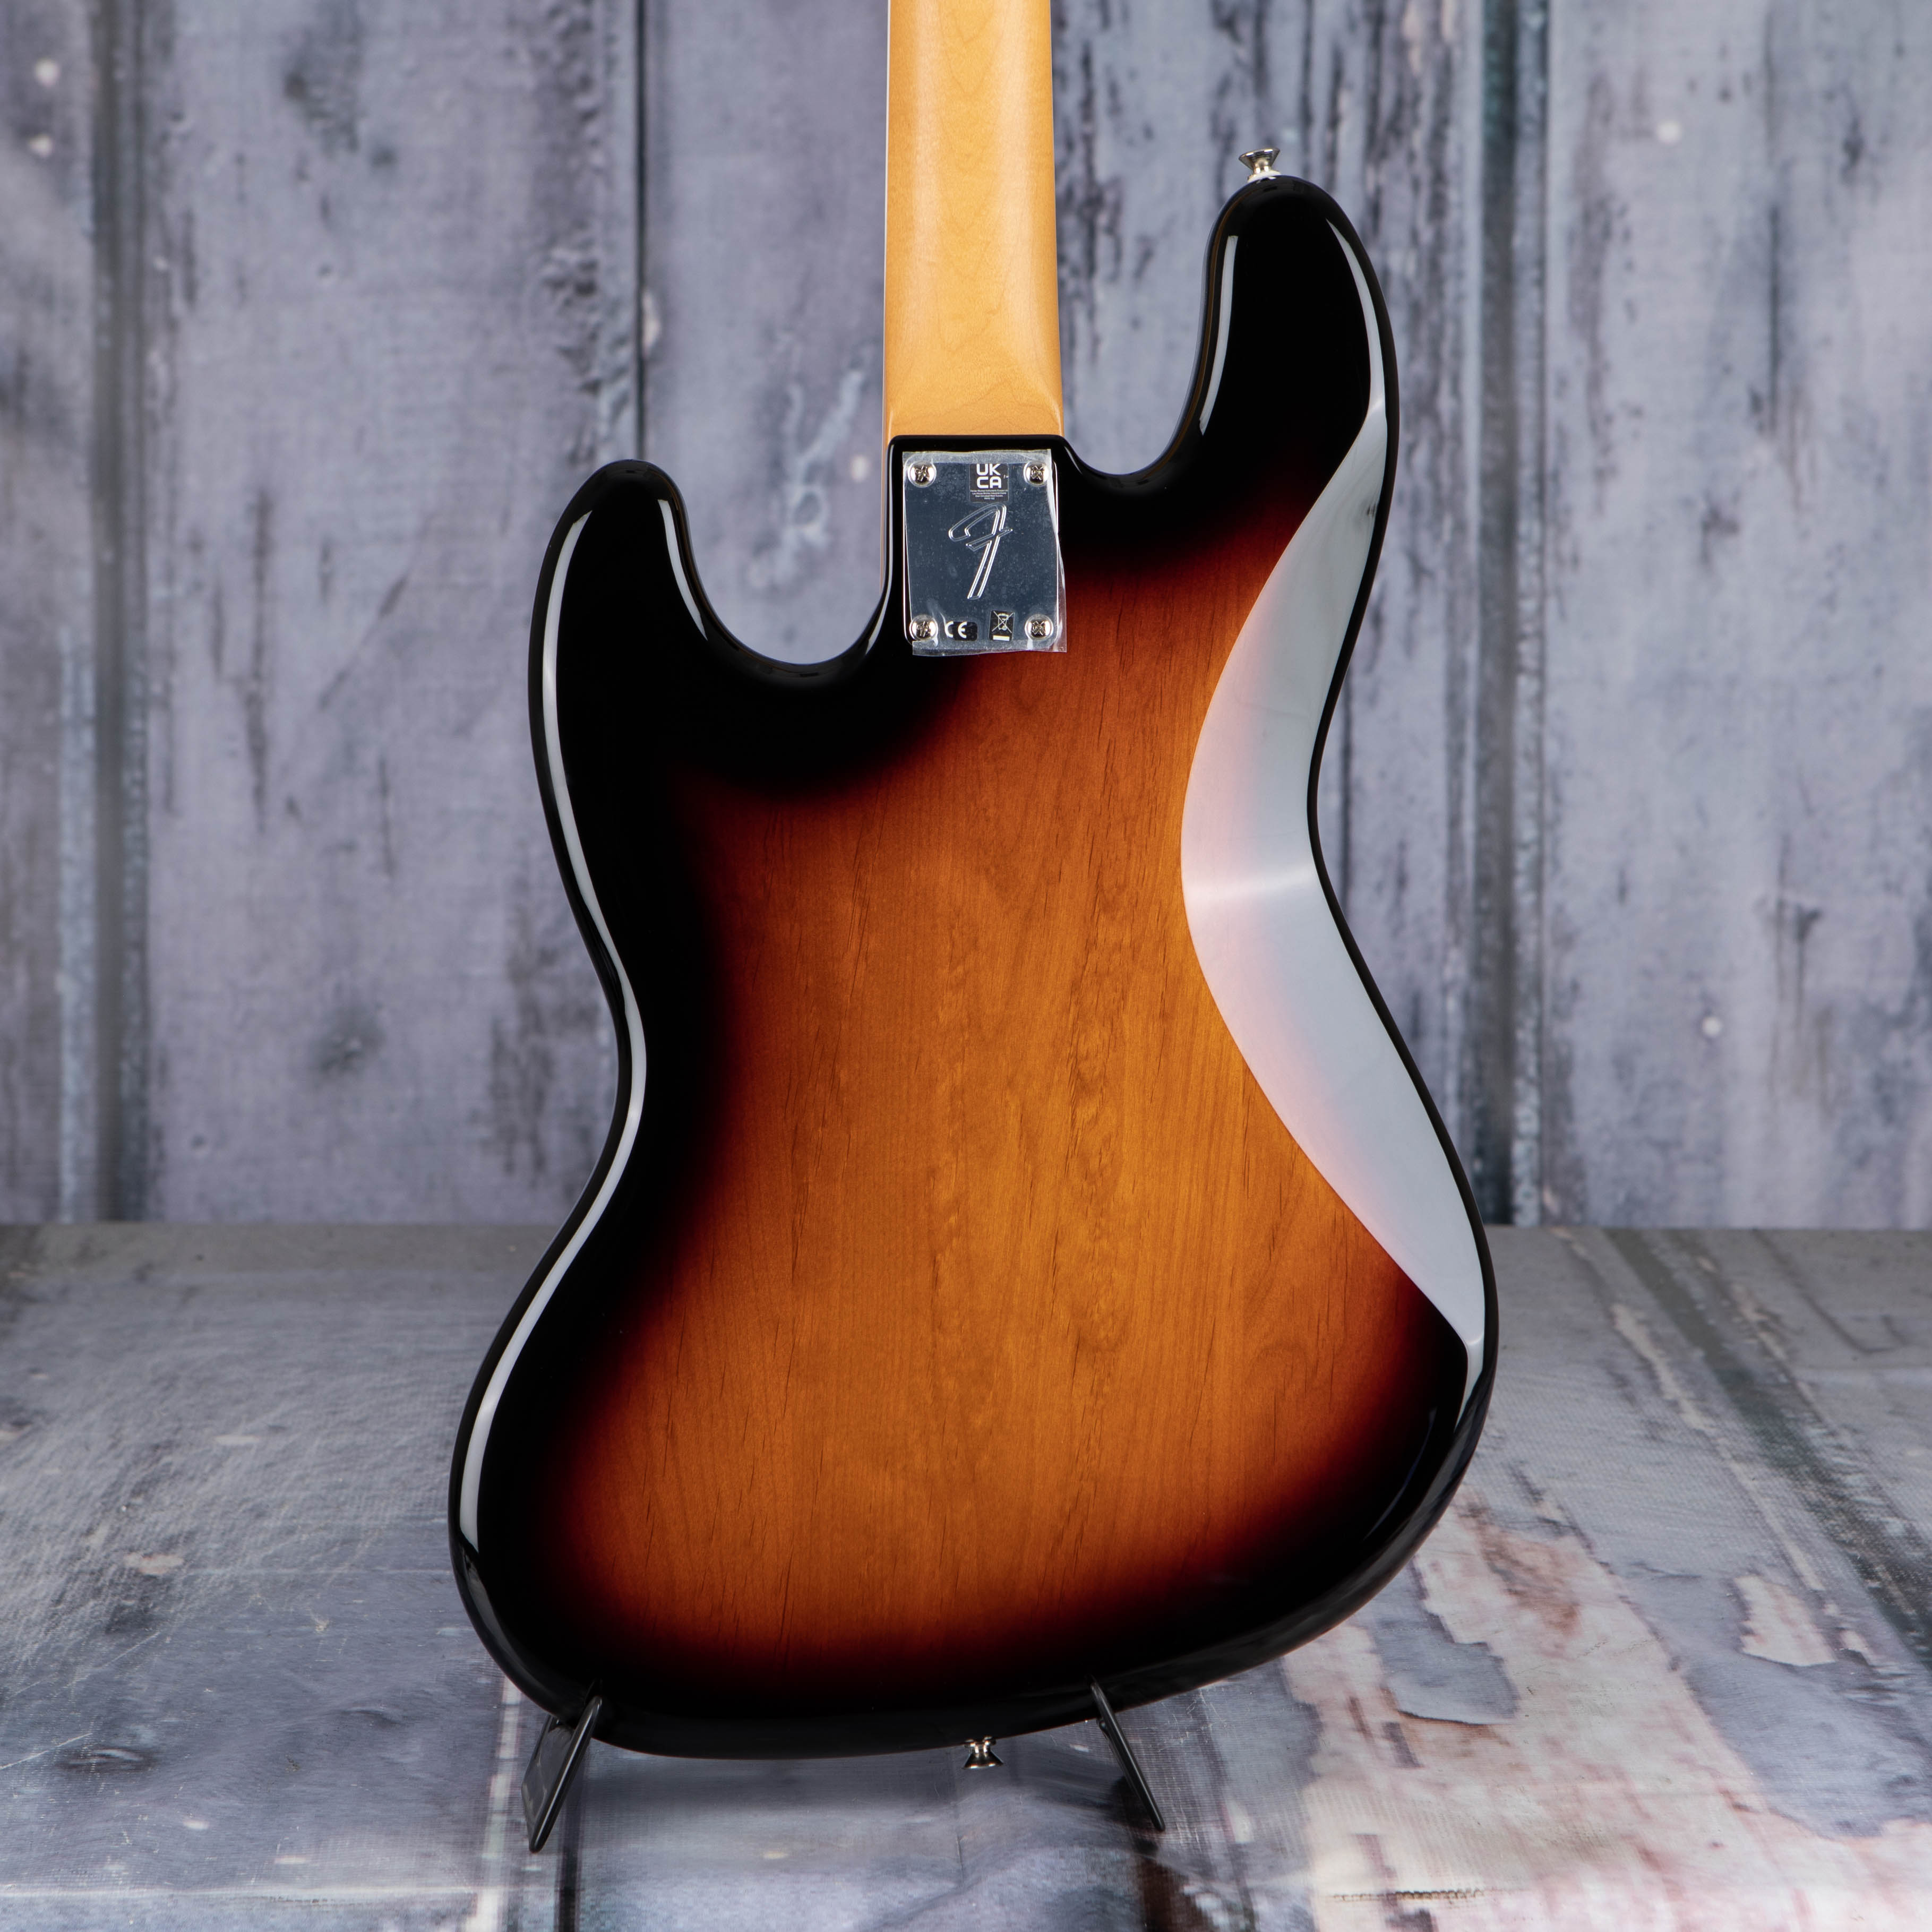 Fender Gold Foil Jazz Bass Guitar, 2-Color Sunburst, back closeup